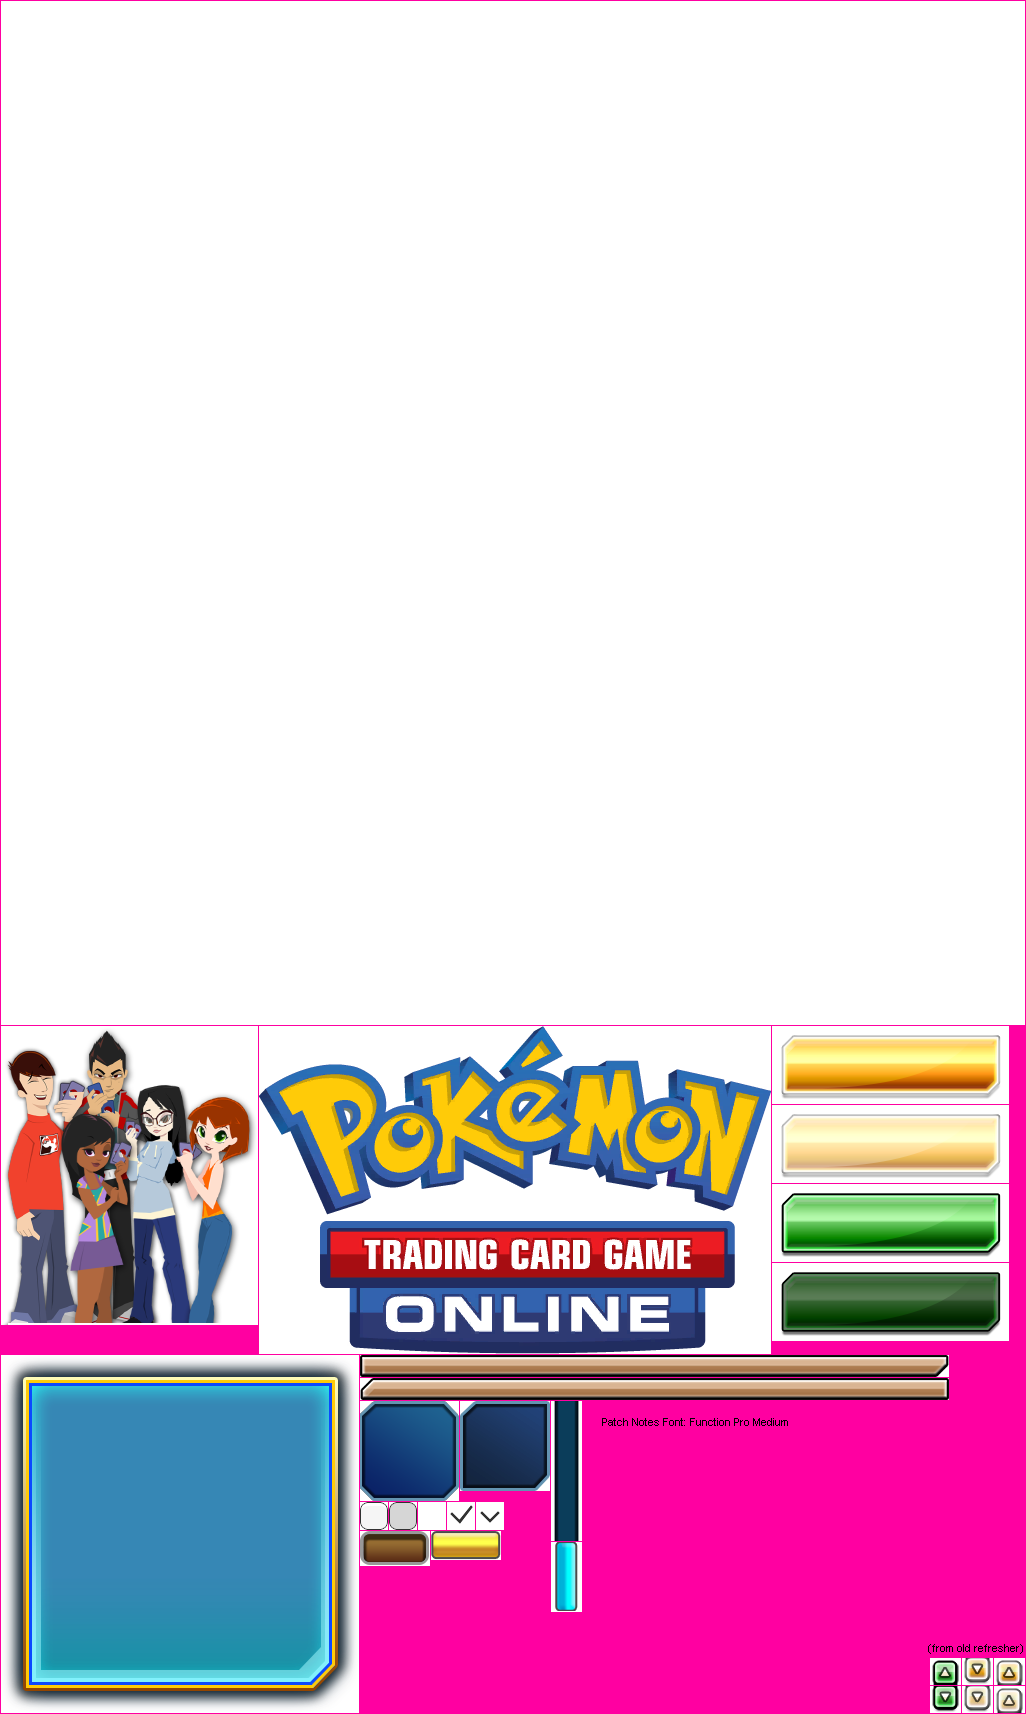 Pokémon Trading Card Game Online - Refresher